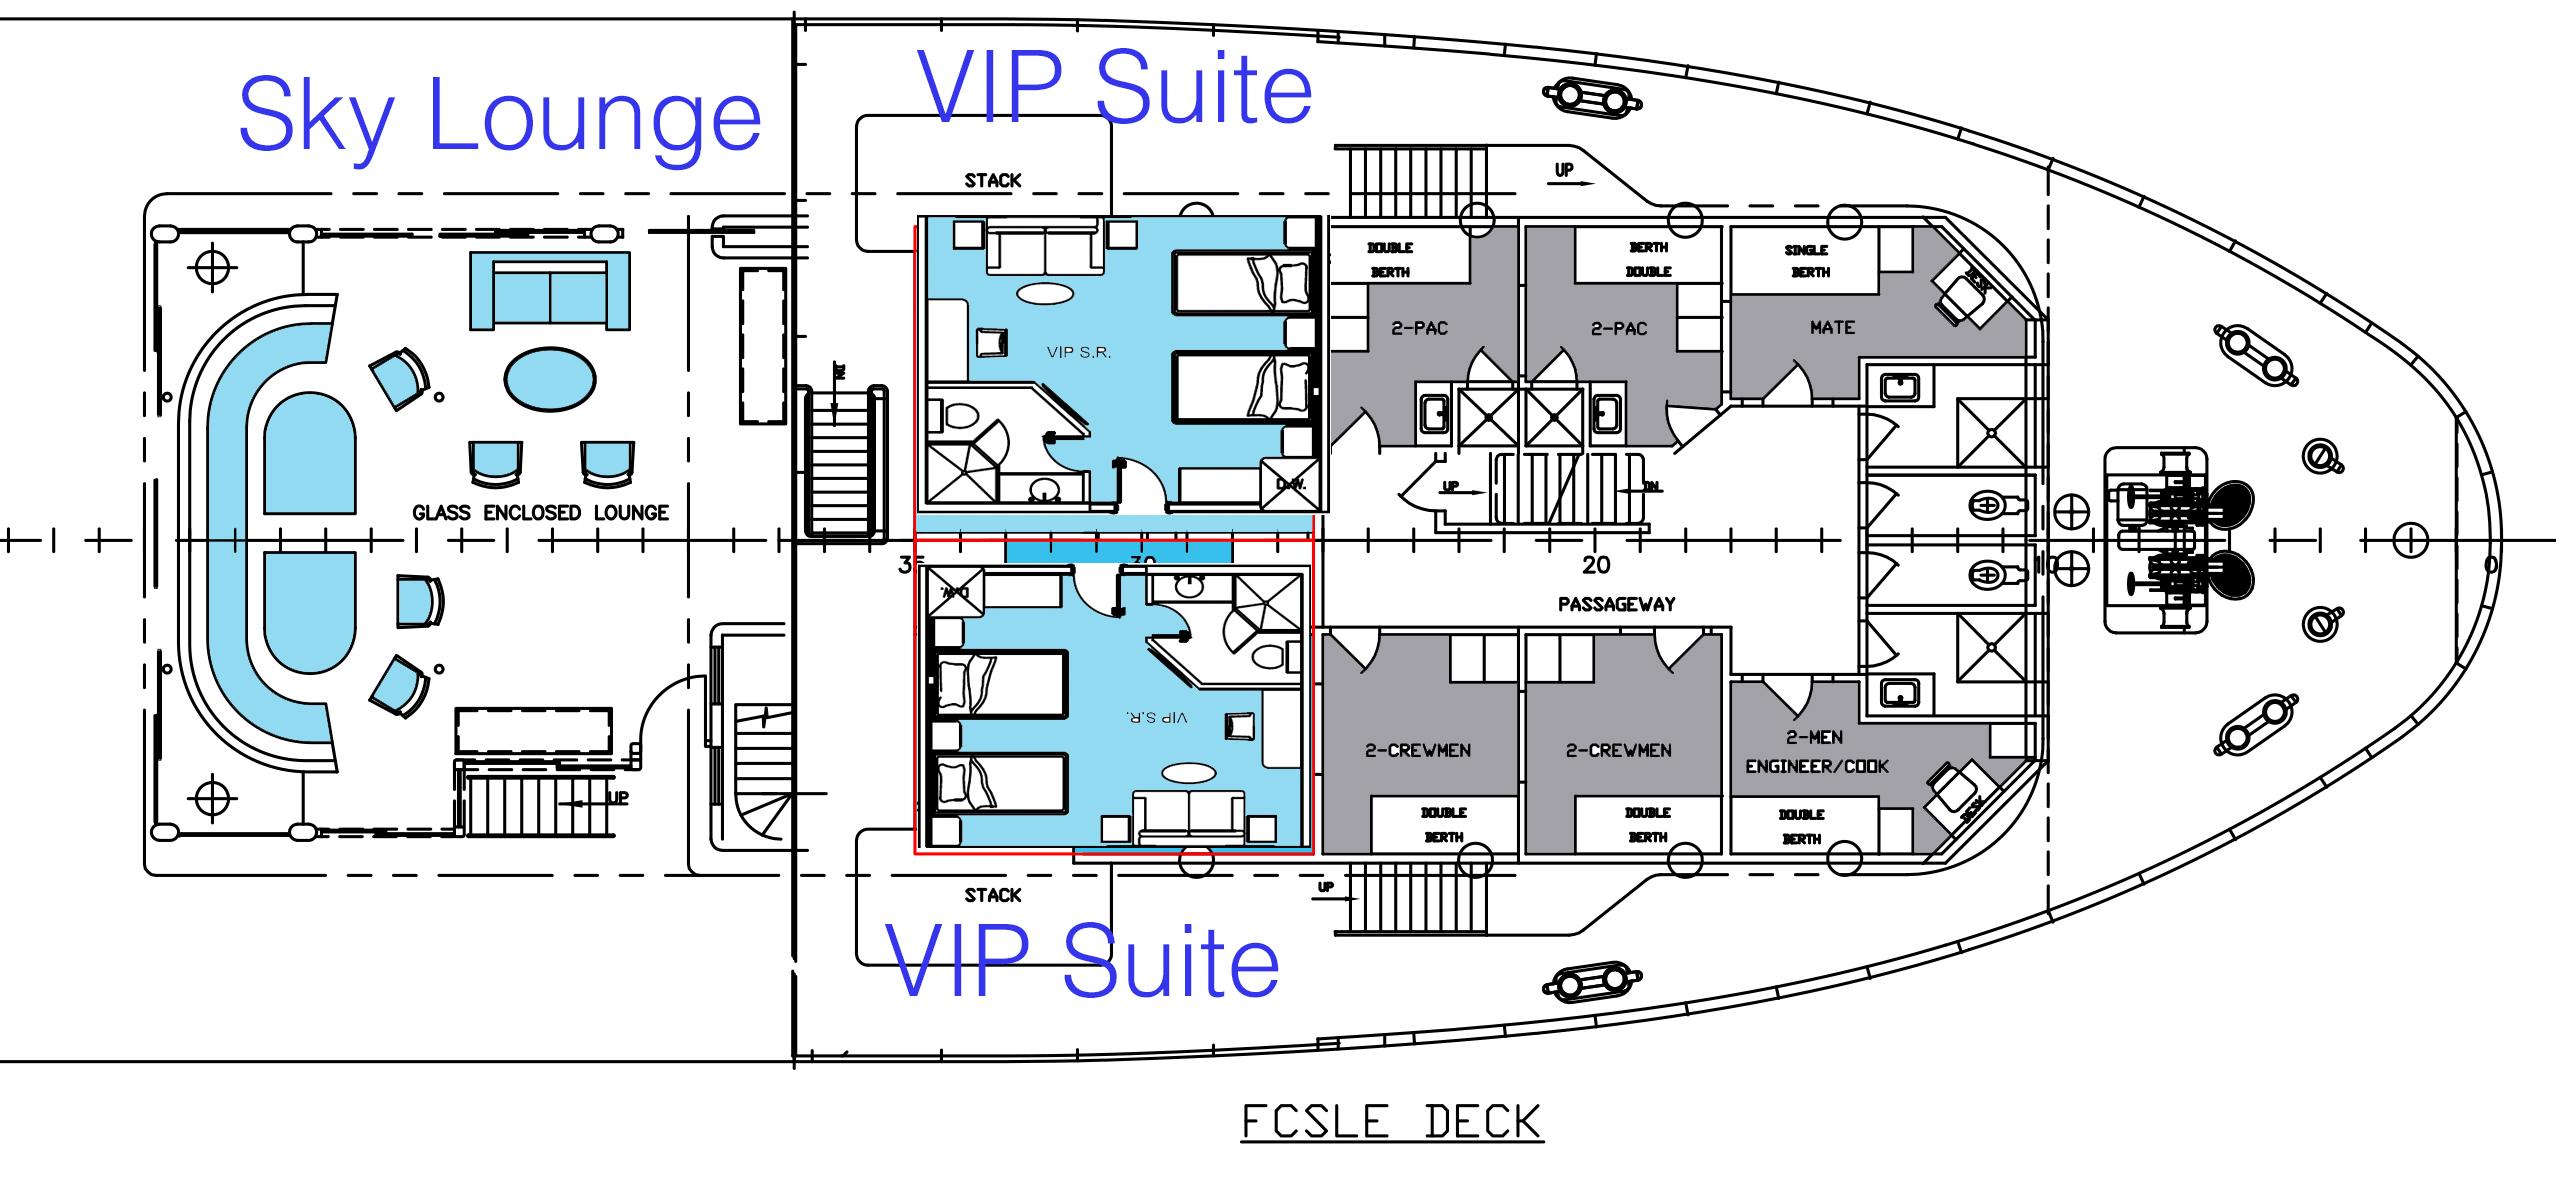 Owner's Deck/VIP Suites